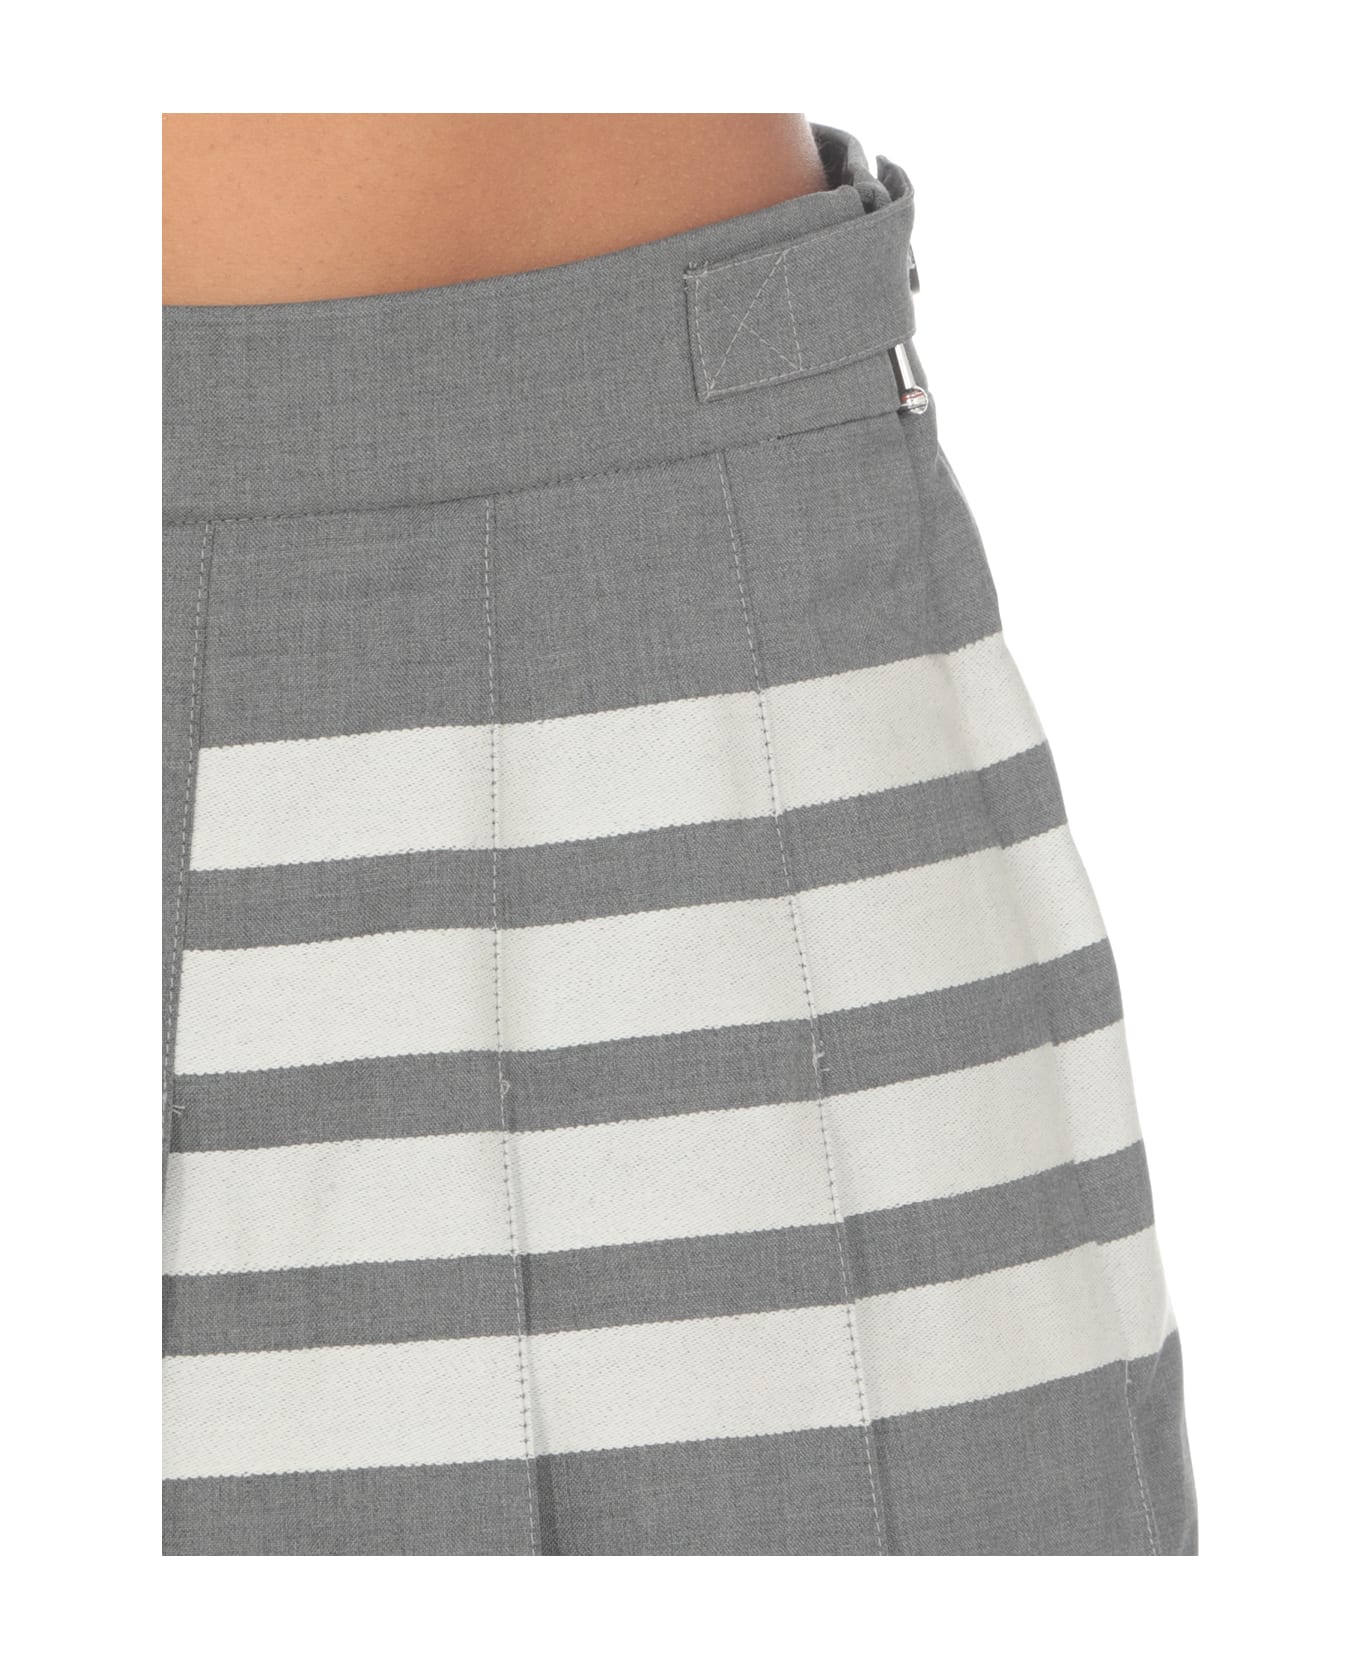 Thom Browne '4 Bar Skirt - Grey